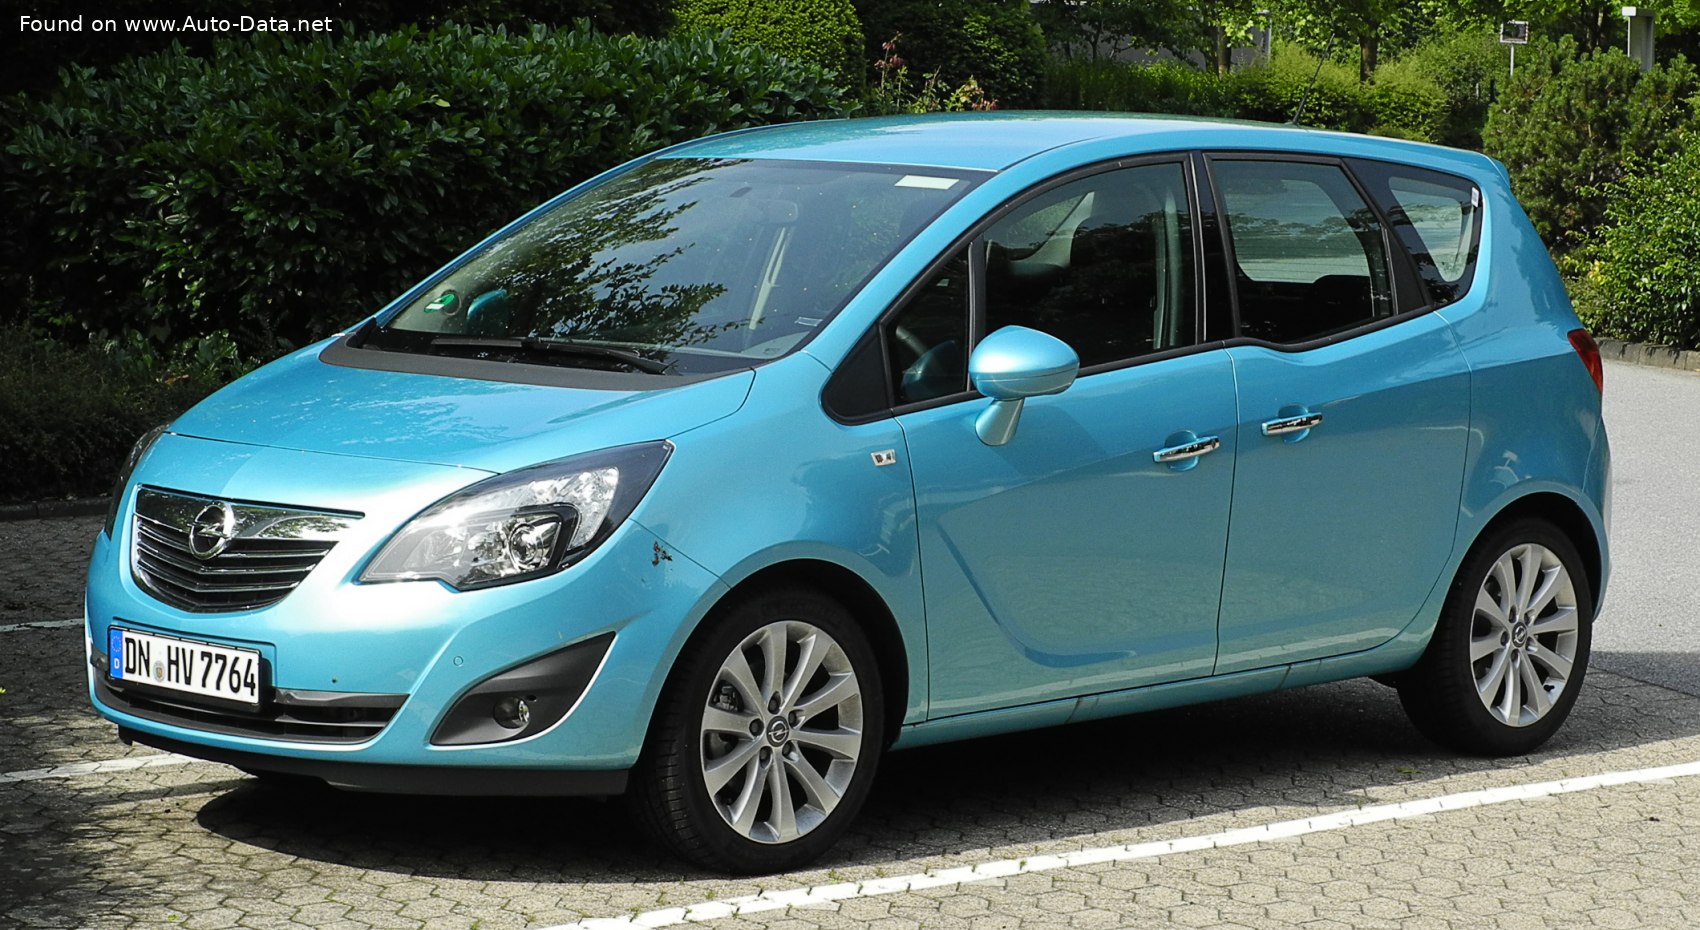 2010 Opel Meriva B 1.4 Turbo (140 Hp) Automatic  Technical specs, data,  fuel consumption, Dimensions